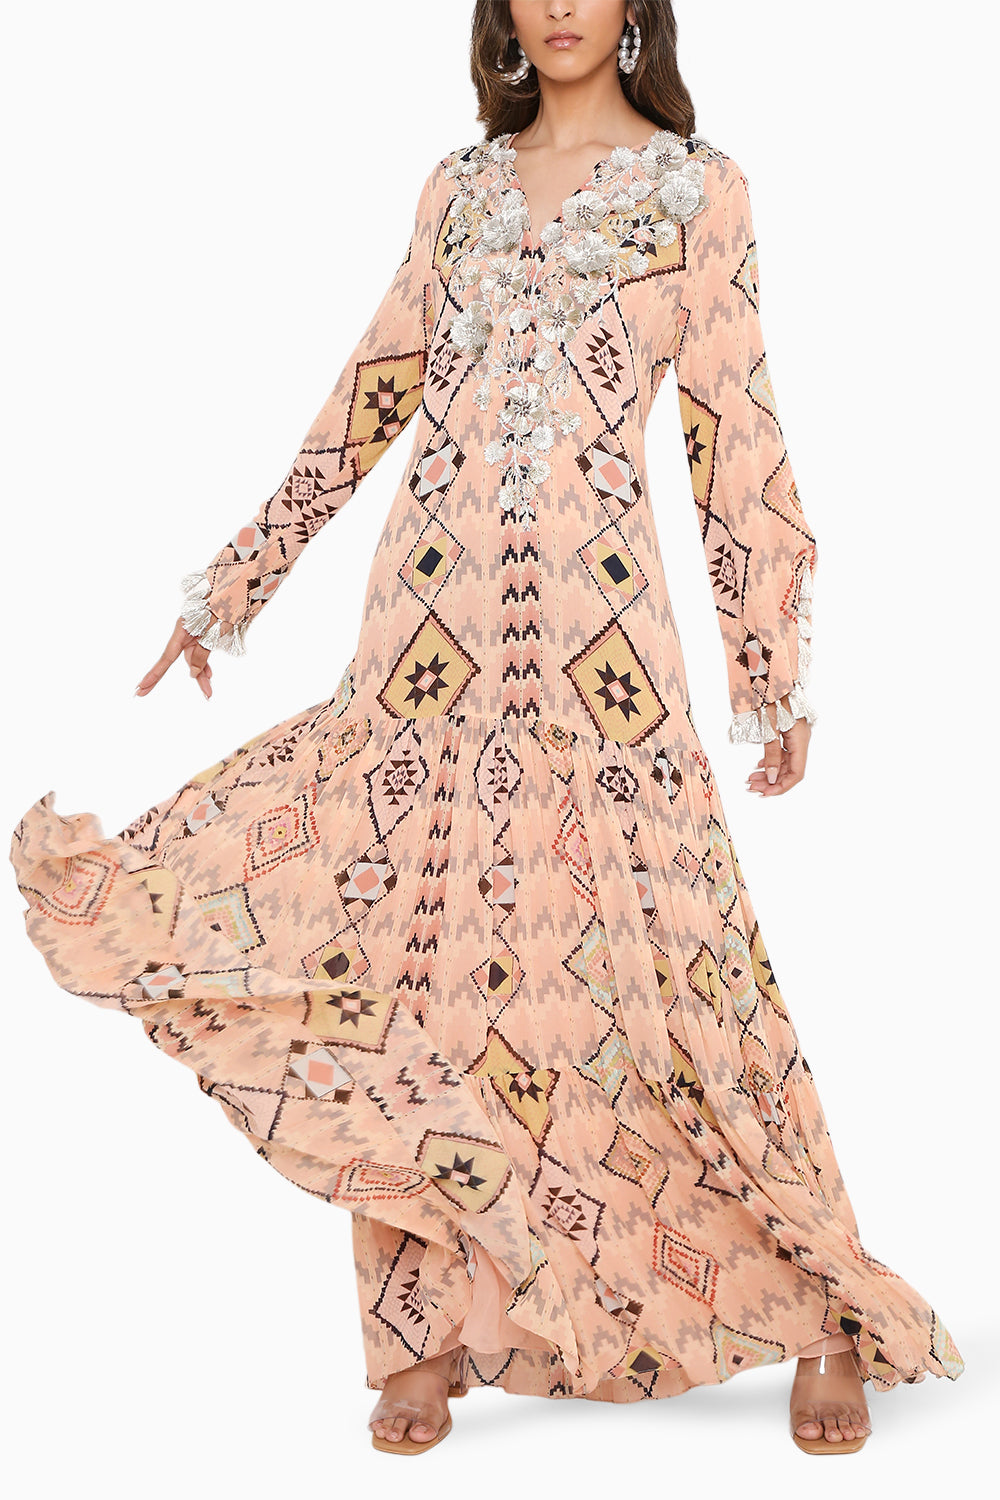 Blush Mosaic Diamond Print Embroidered Boho Dress